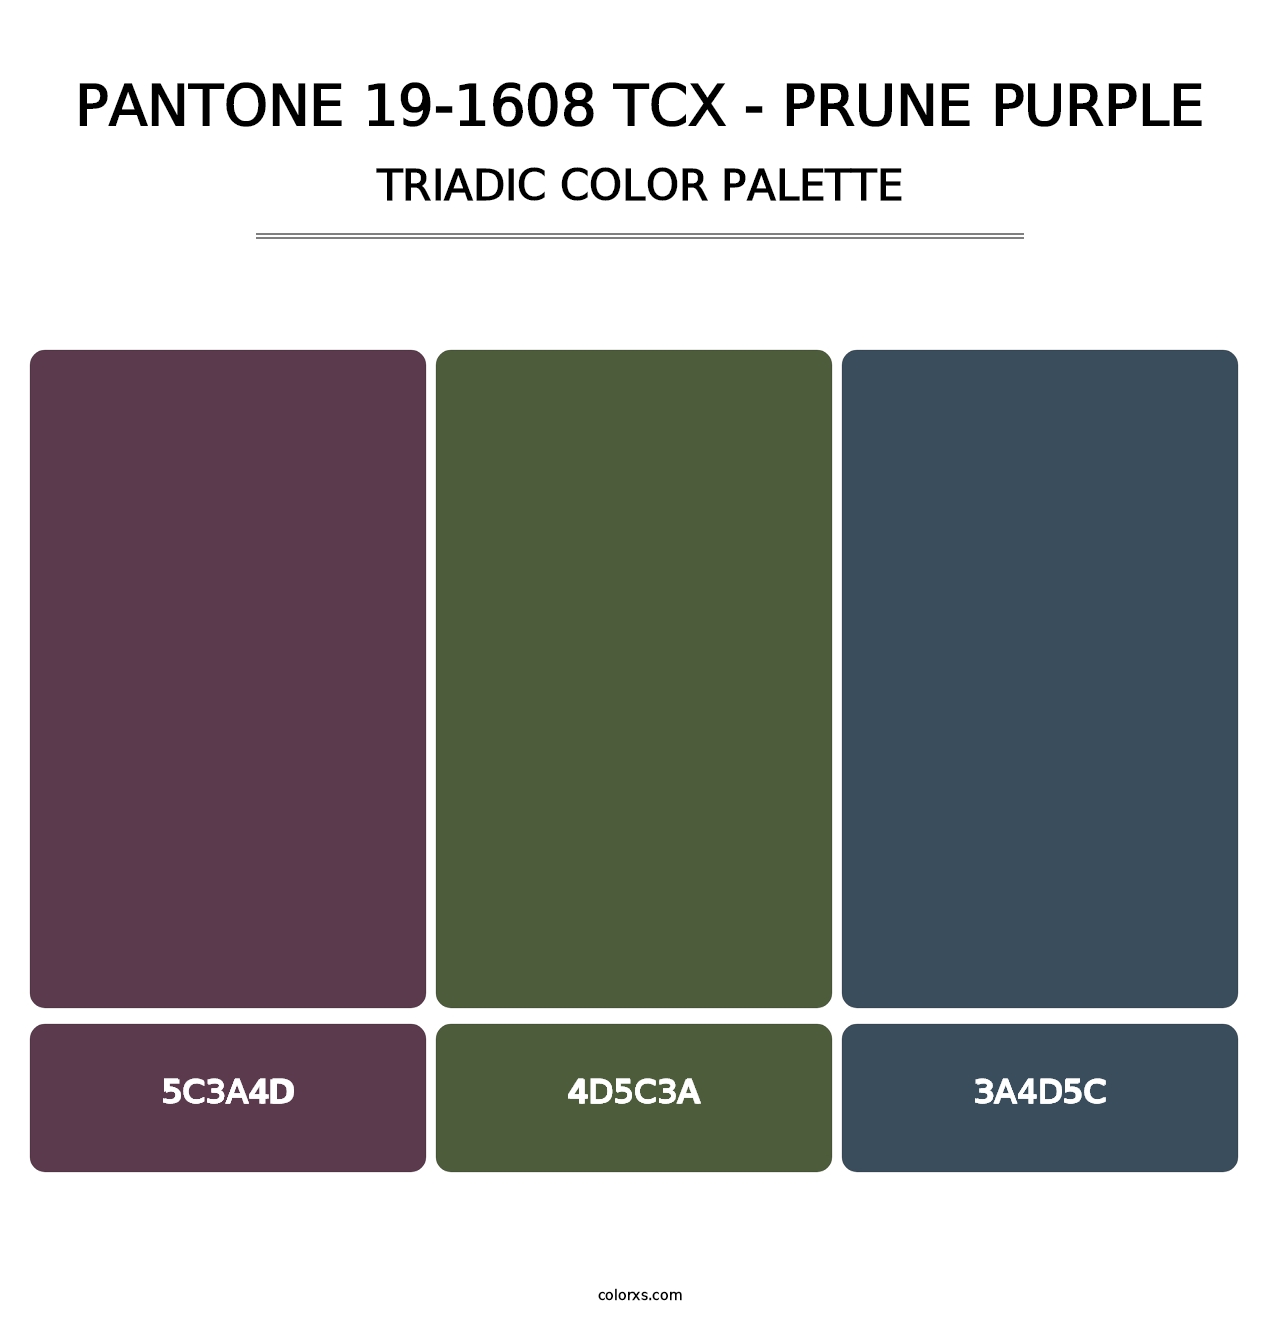 PANTONE 19-1608 TCX - Prune Purple - Triadic Color Palette